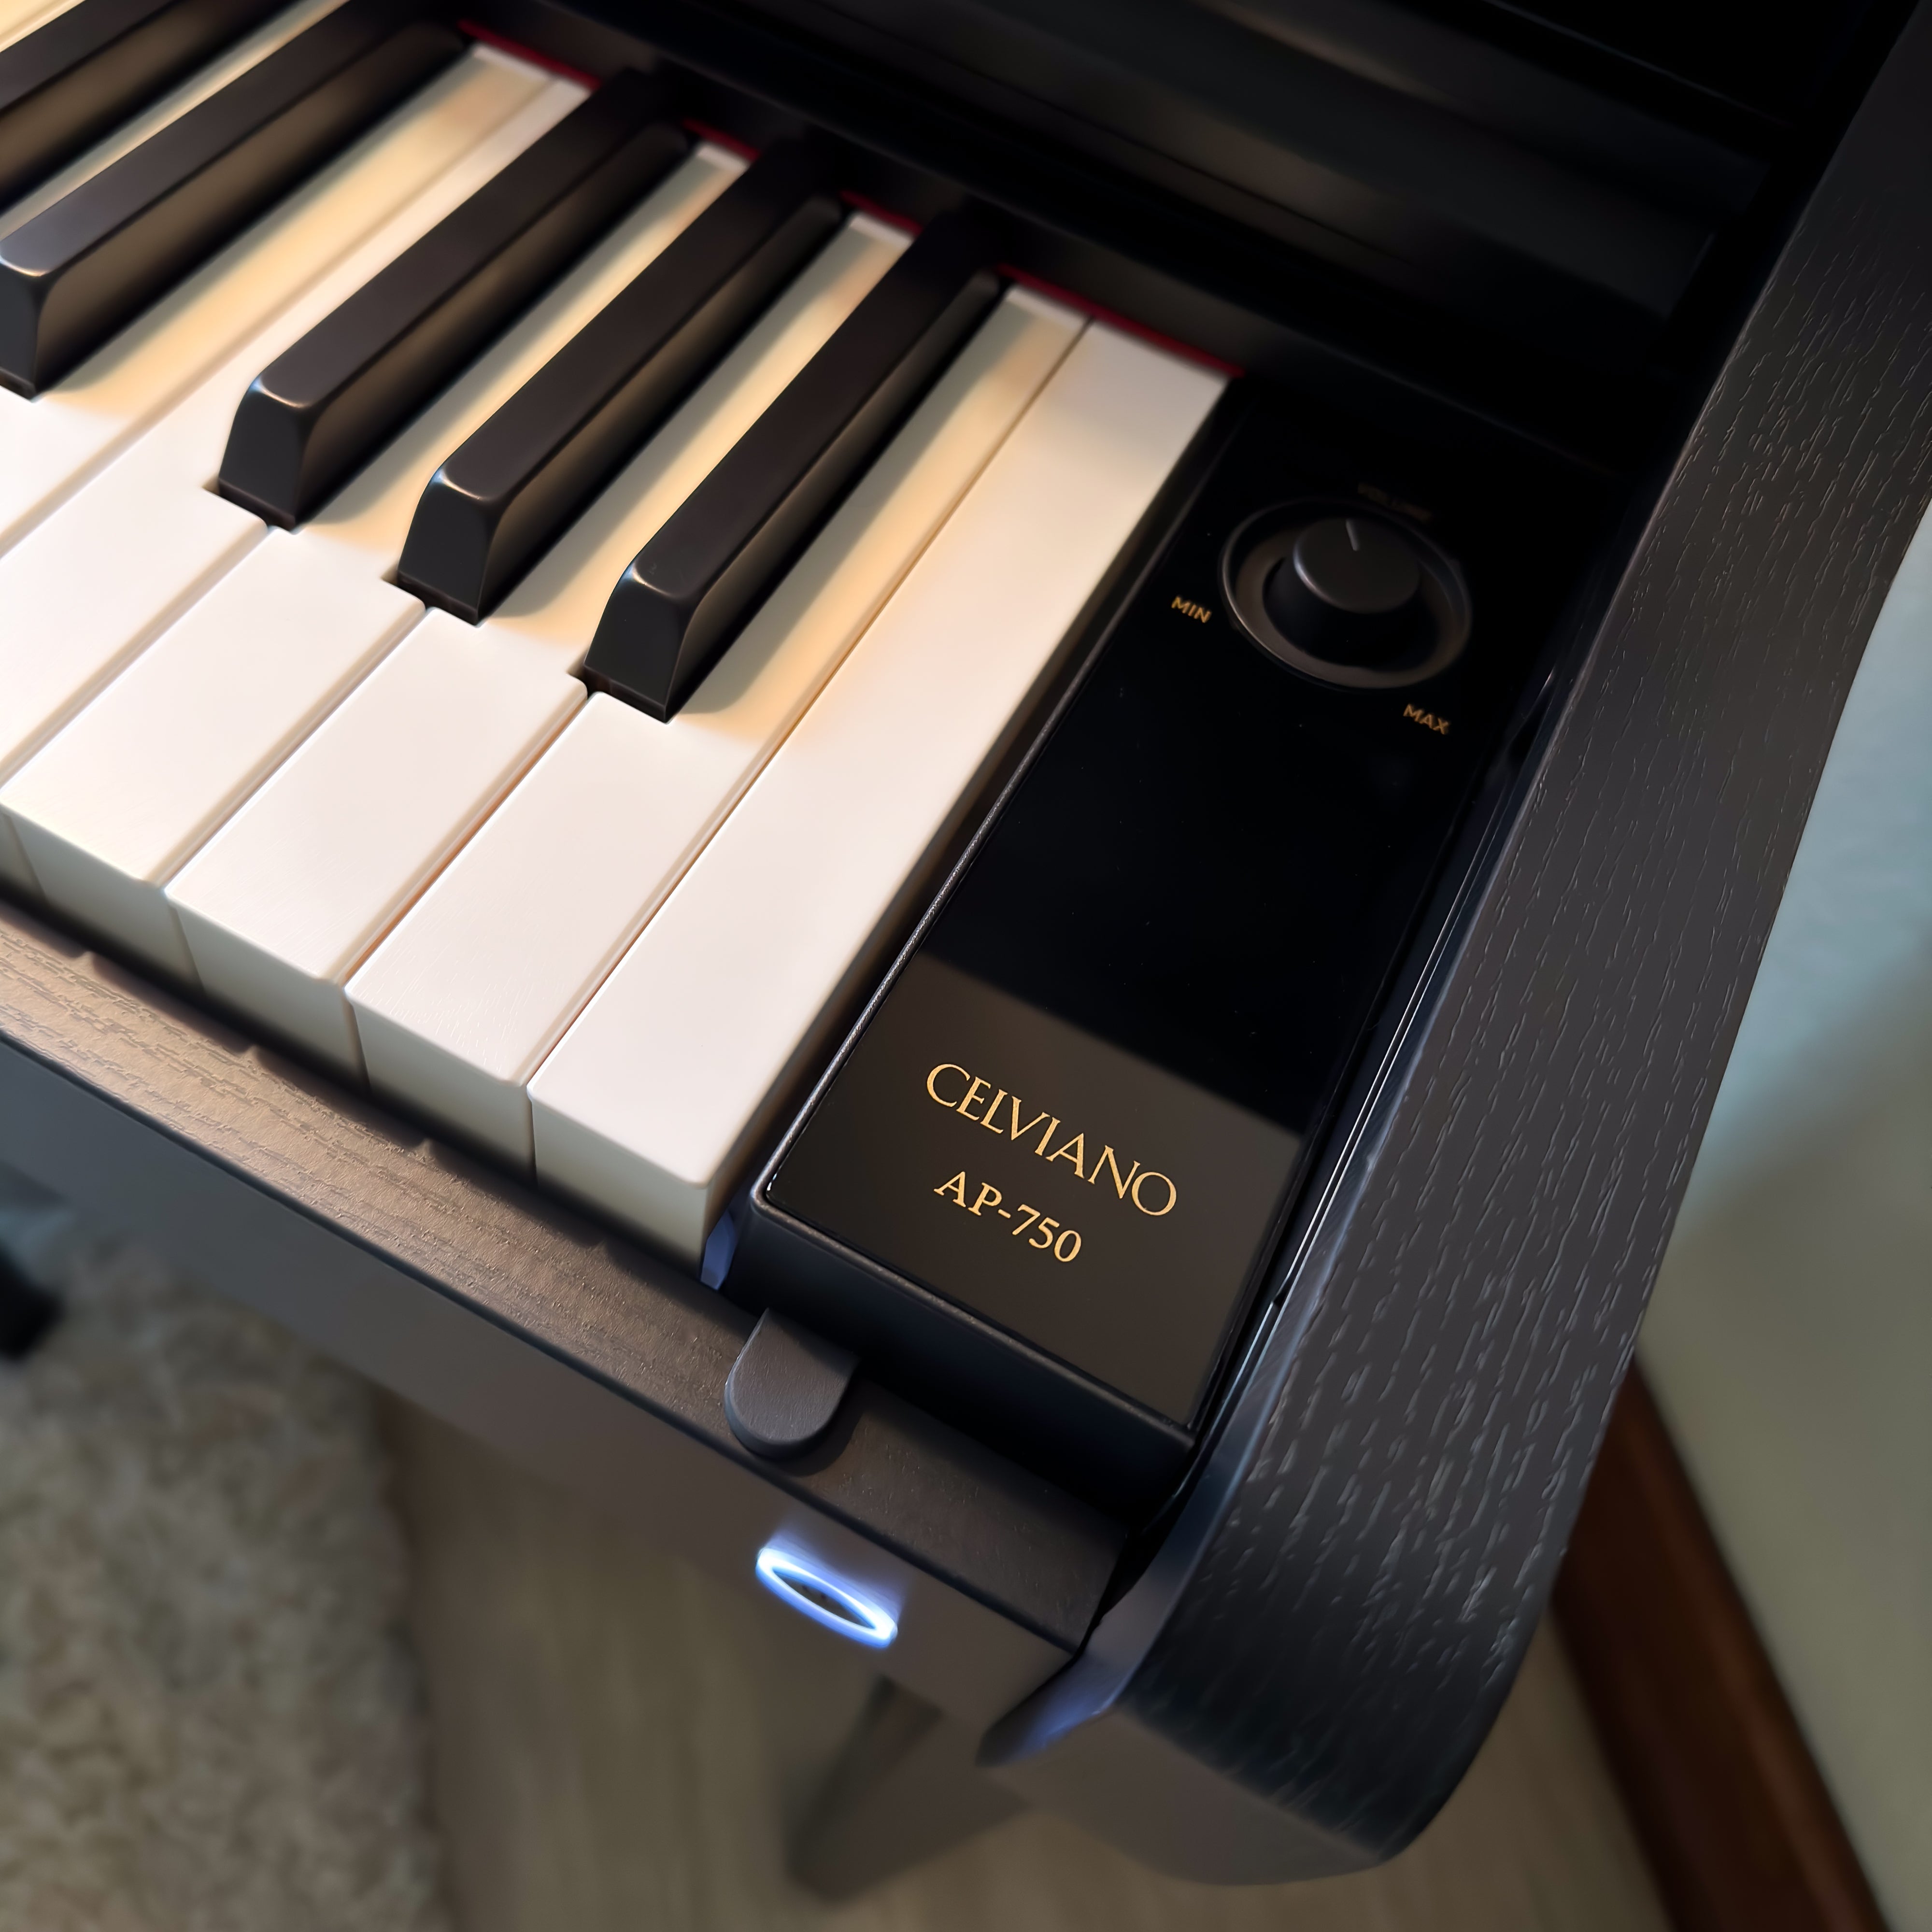 Casio Celviano AP-750 Digital Piano - Black - View 10